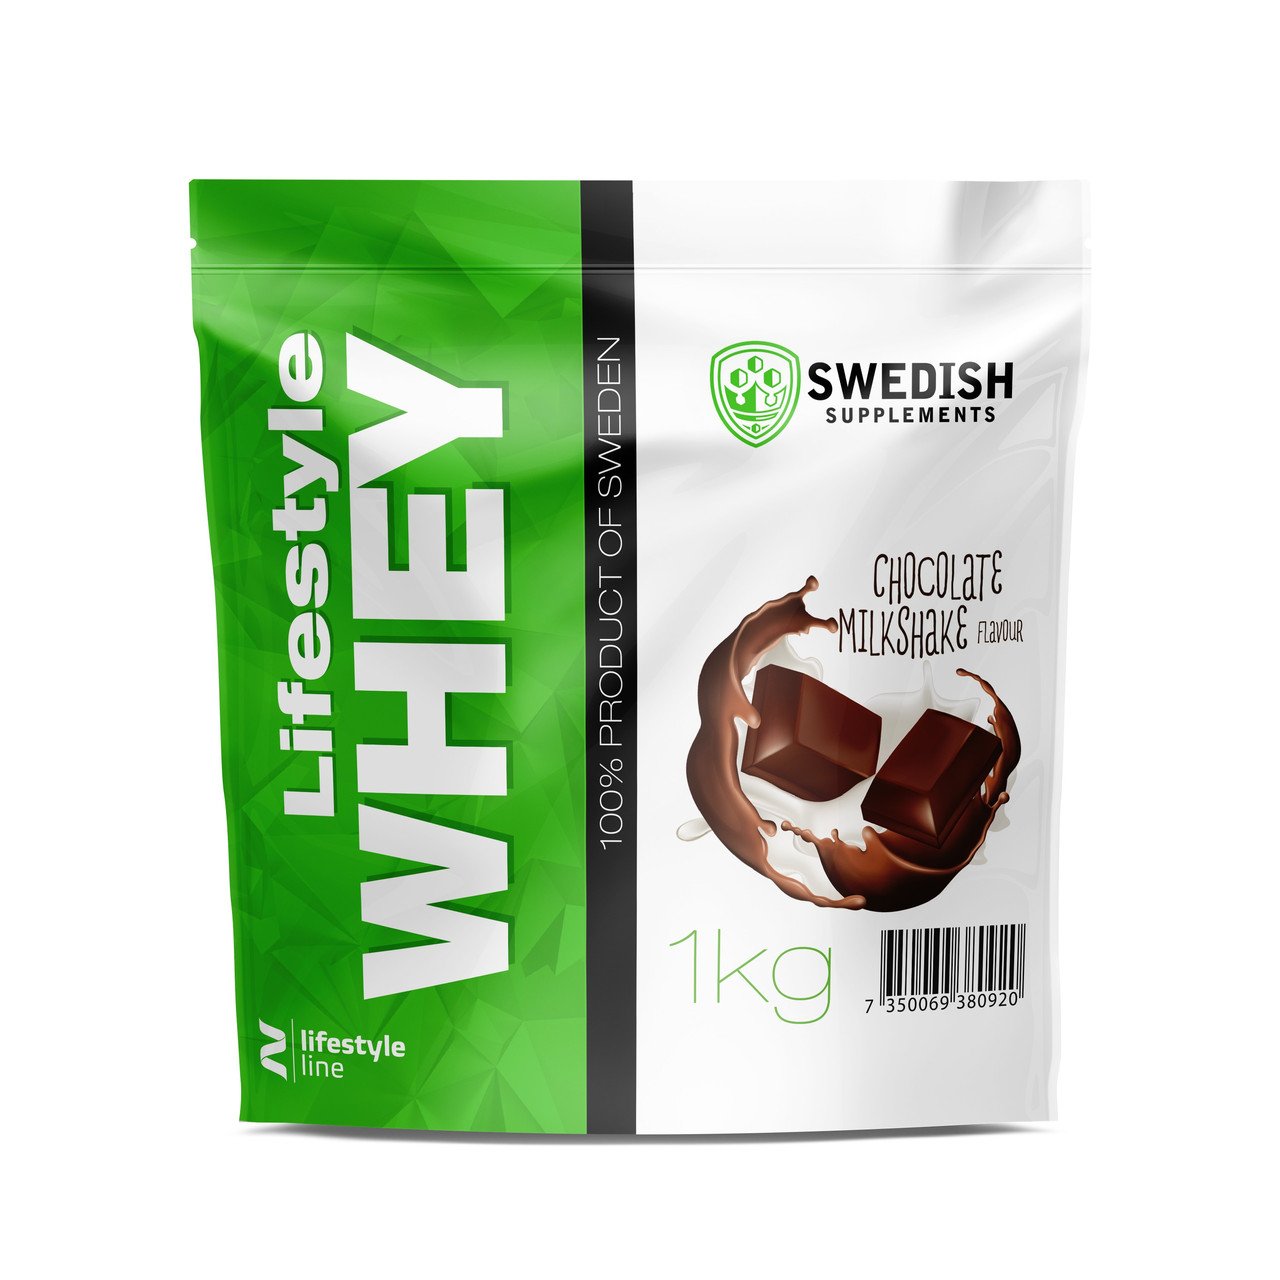 Swedish supplements - LS Whey Protein - 1kg Chocolate Peanut butter,  мл, Swedish Supplements. Сывороточный протеин. Восстановление Антикатаболические свойства Сухая мышечная масса 